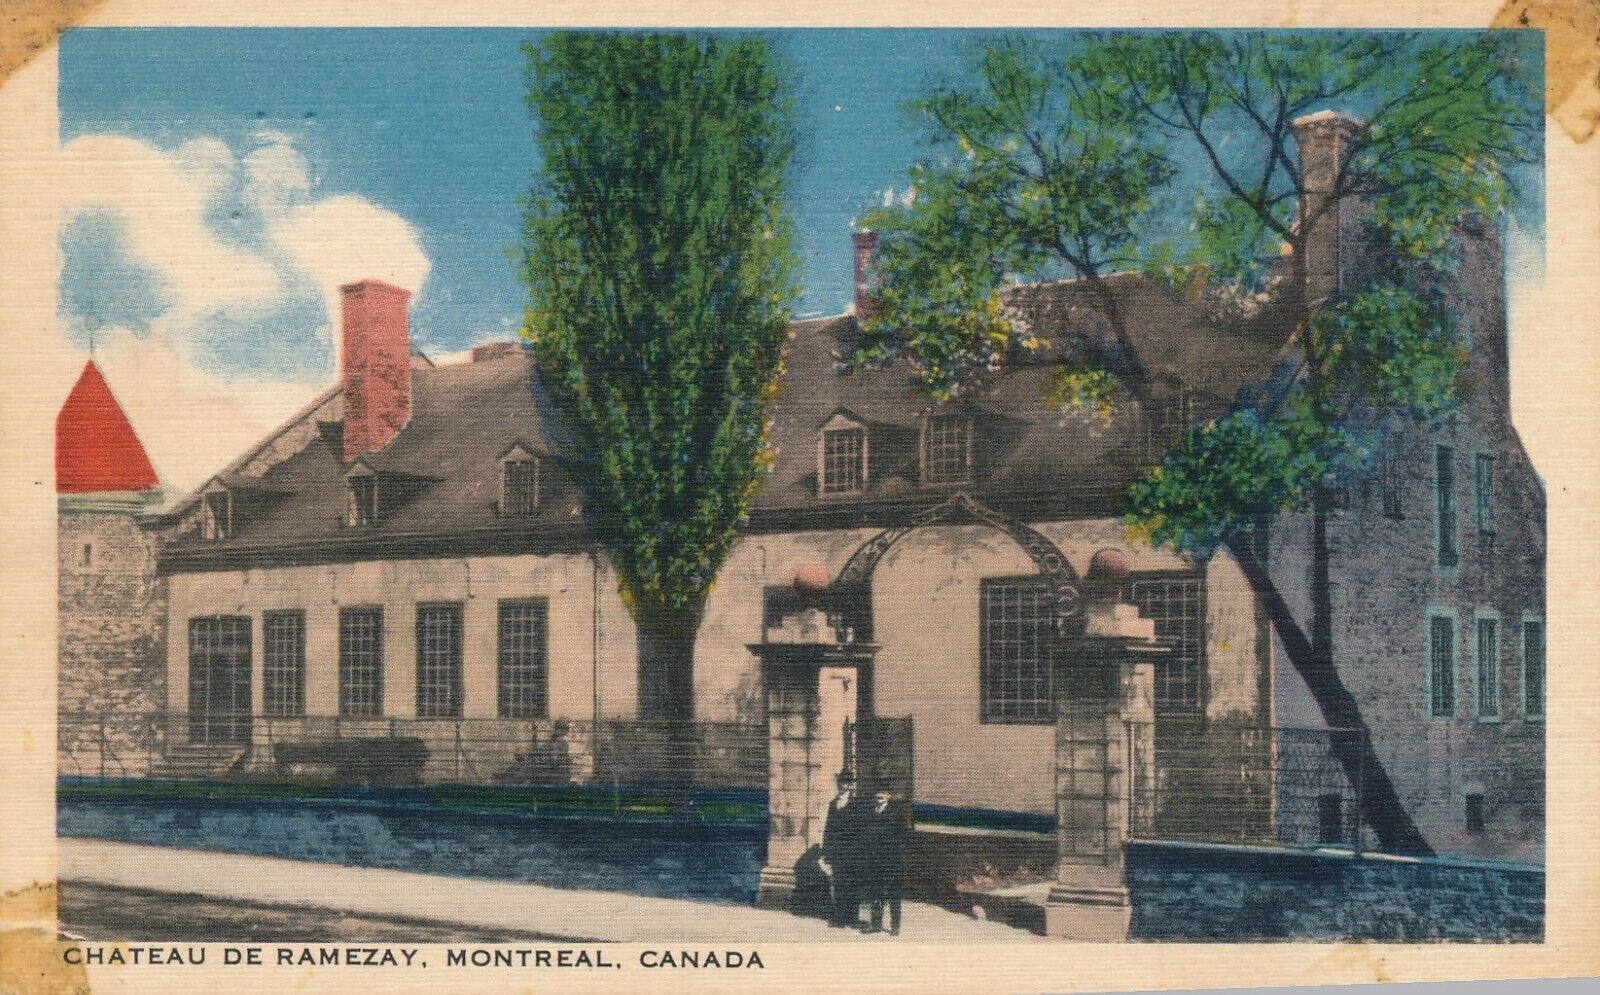 Chateau de Ramezay in Montreal, Canada antique unposted postcard